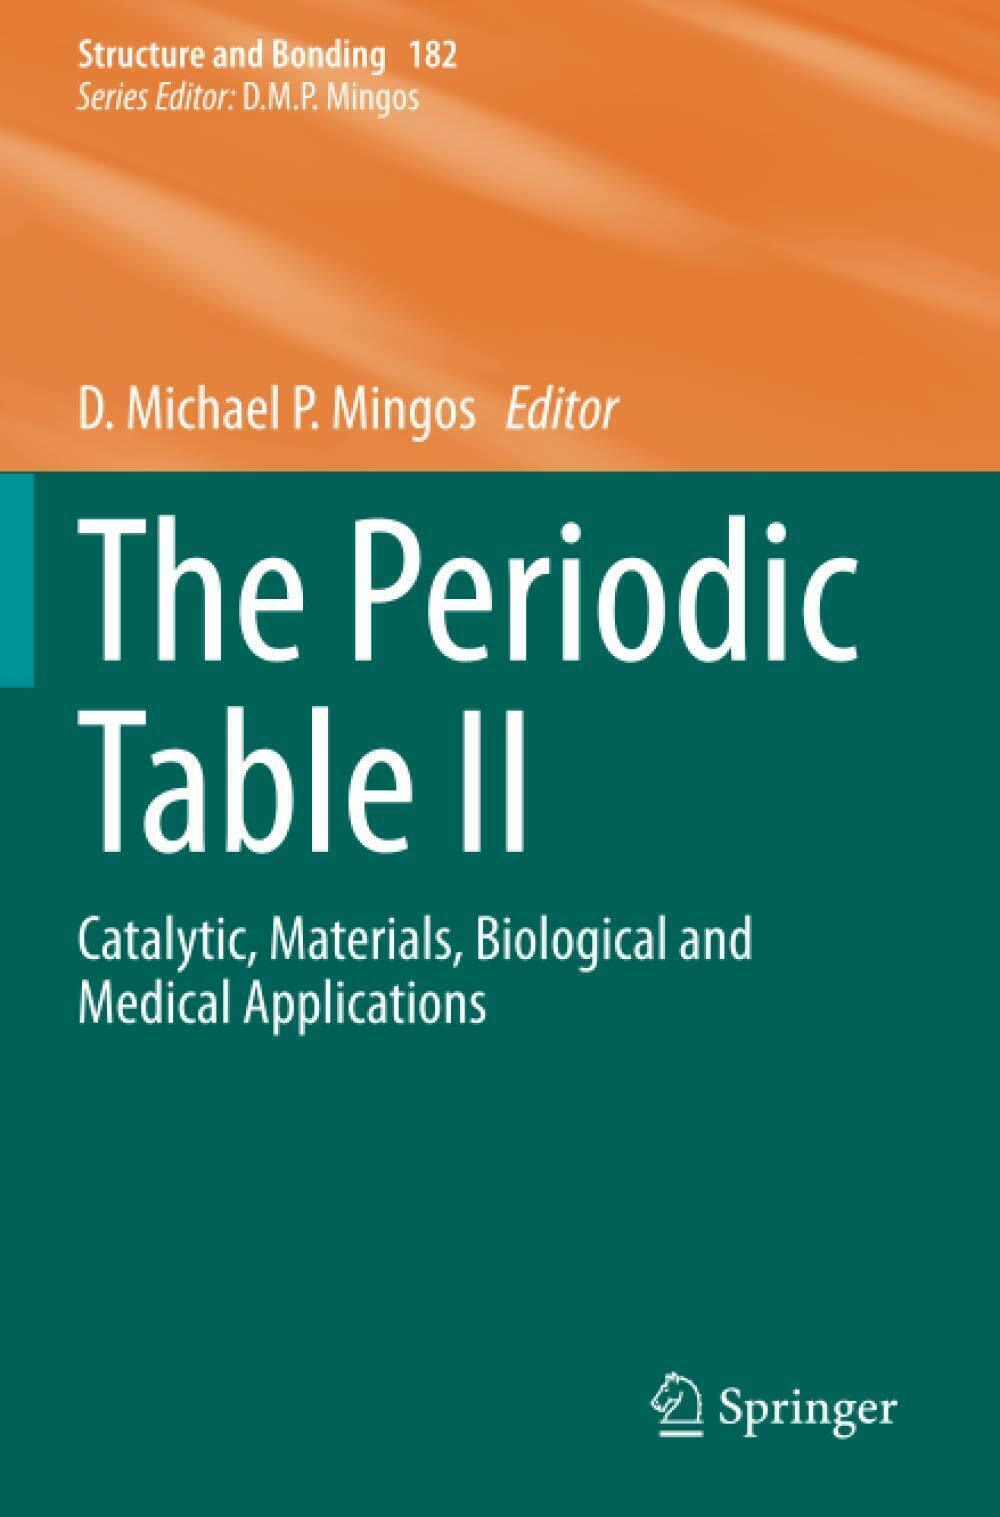 The Periodic Table II - D. Michael P. Mingos - Springer, 2021